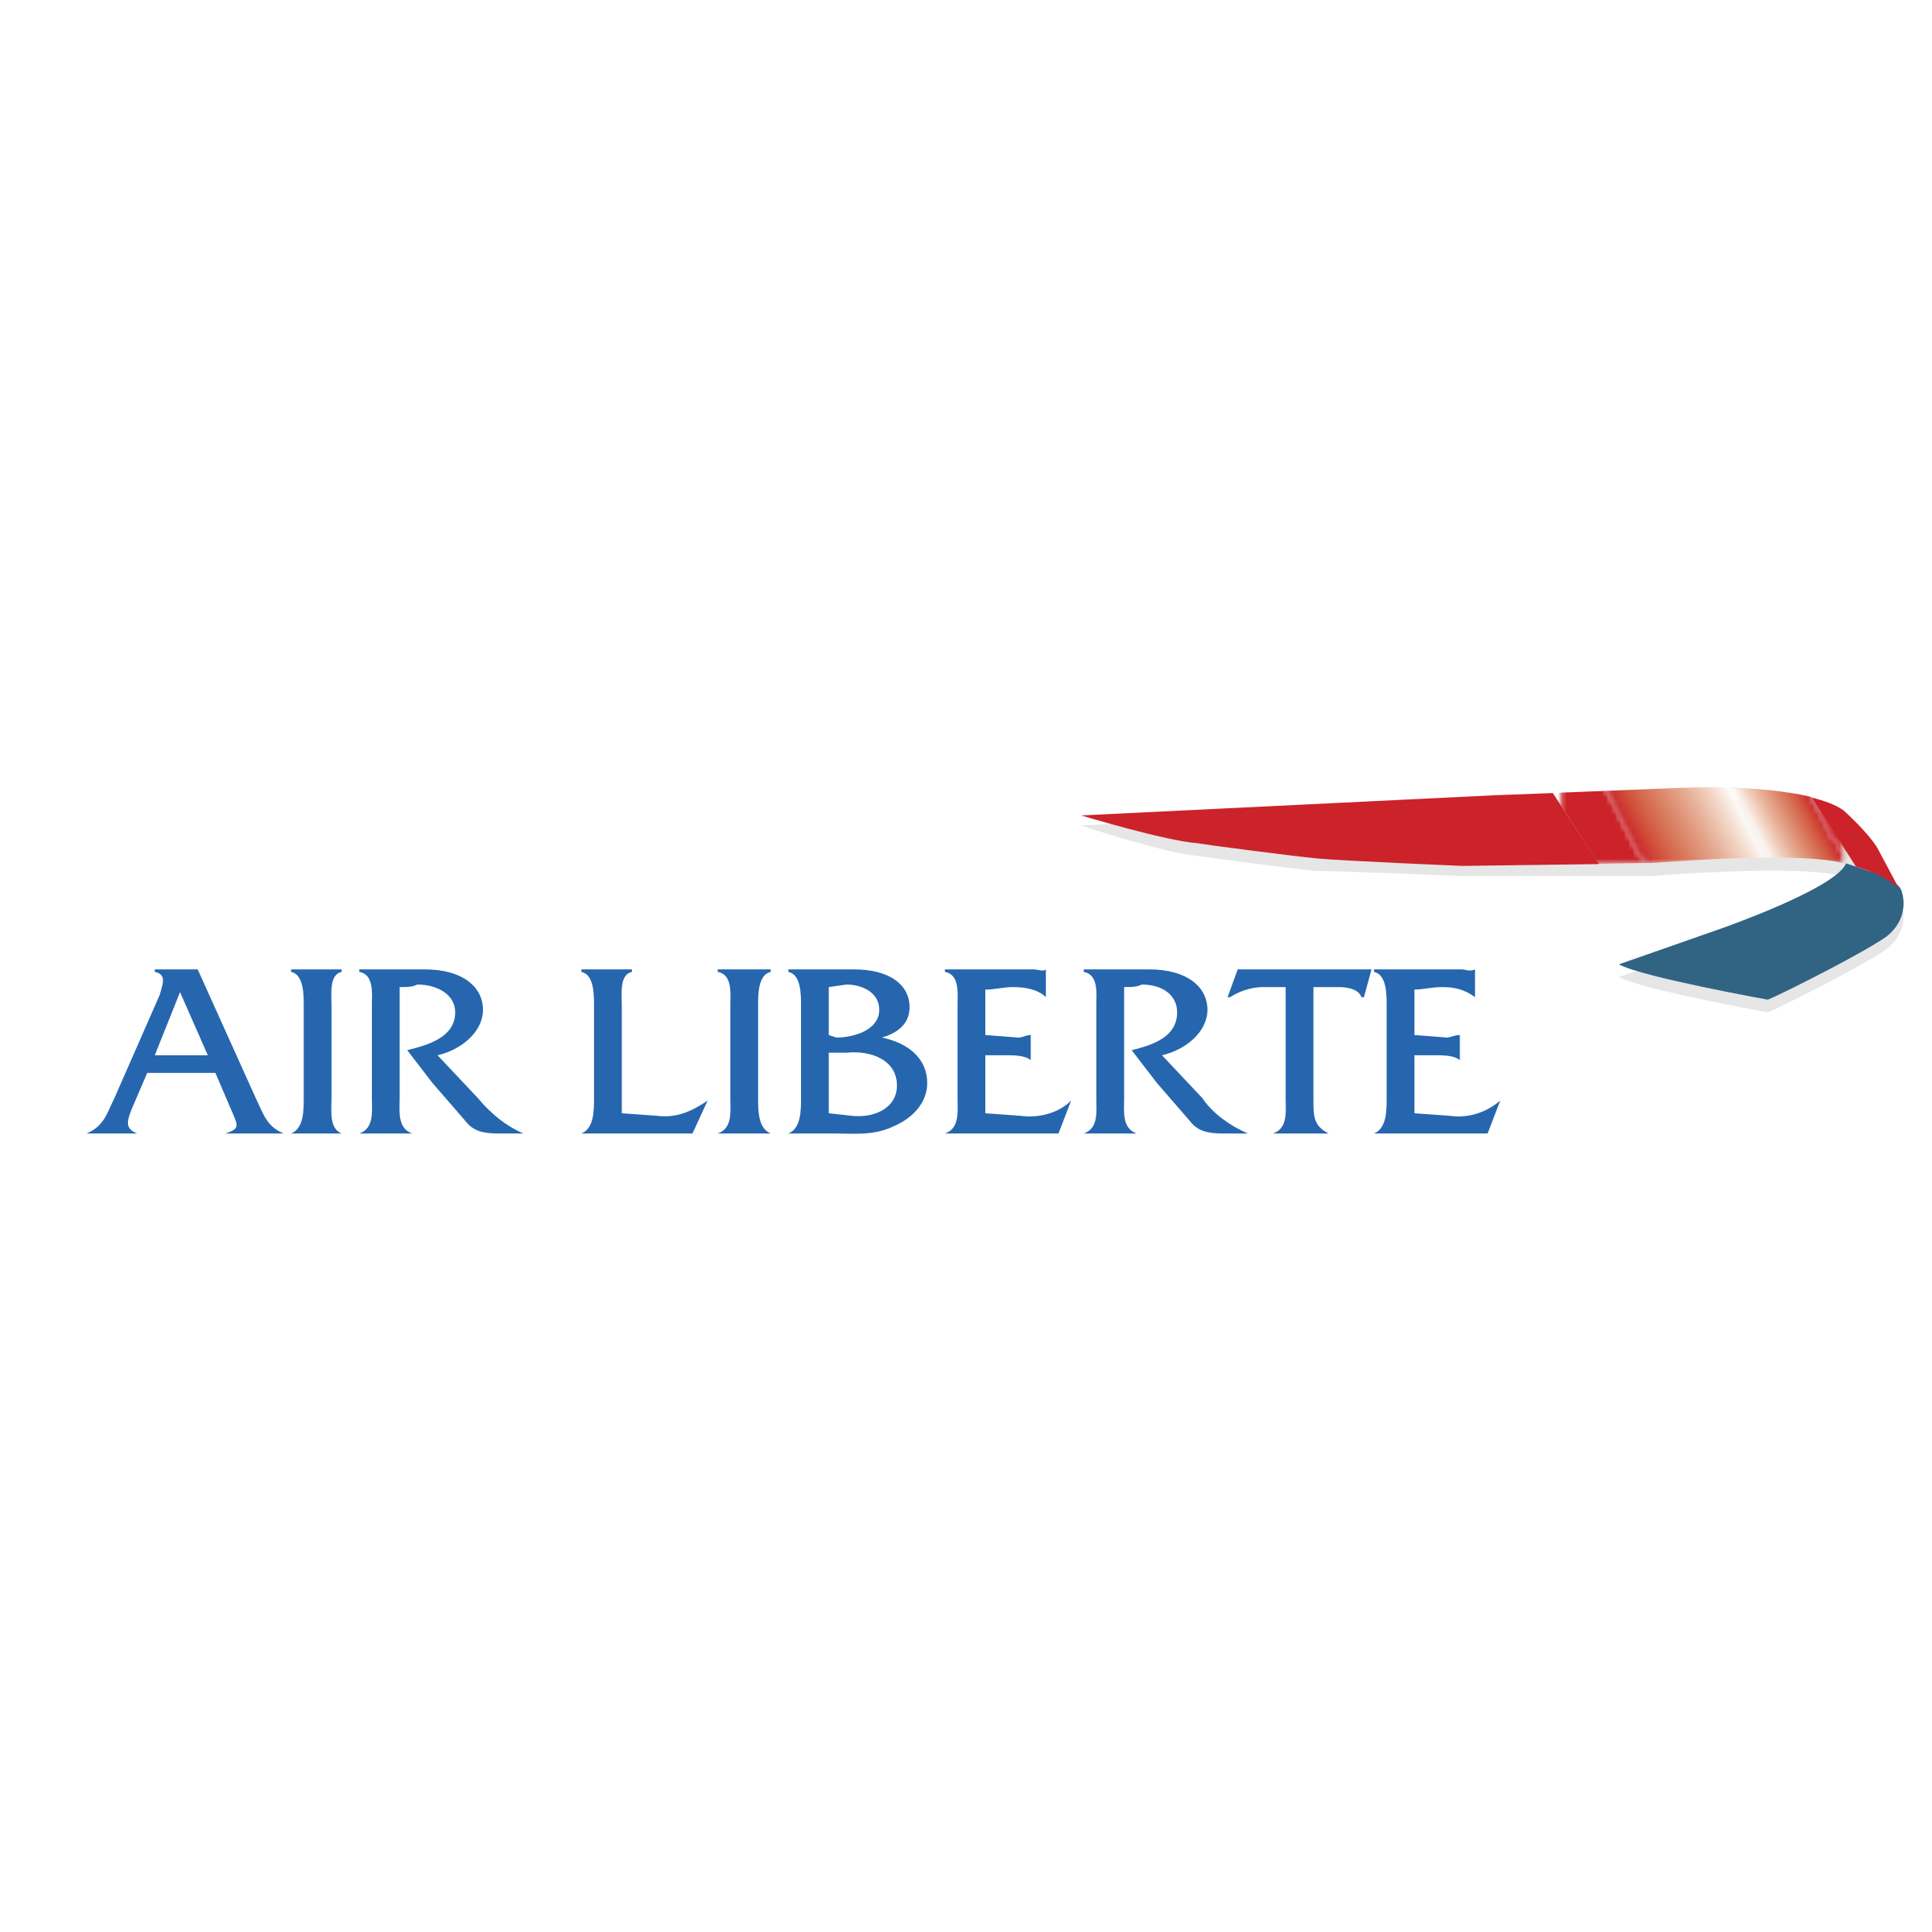 Liberte Logo - Air Liberte Logo PNG Transparent & SVG Vector - Freebie Supply